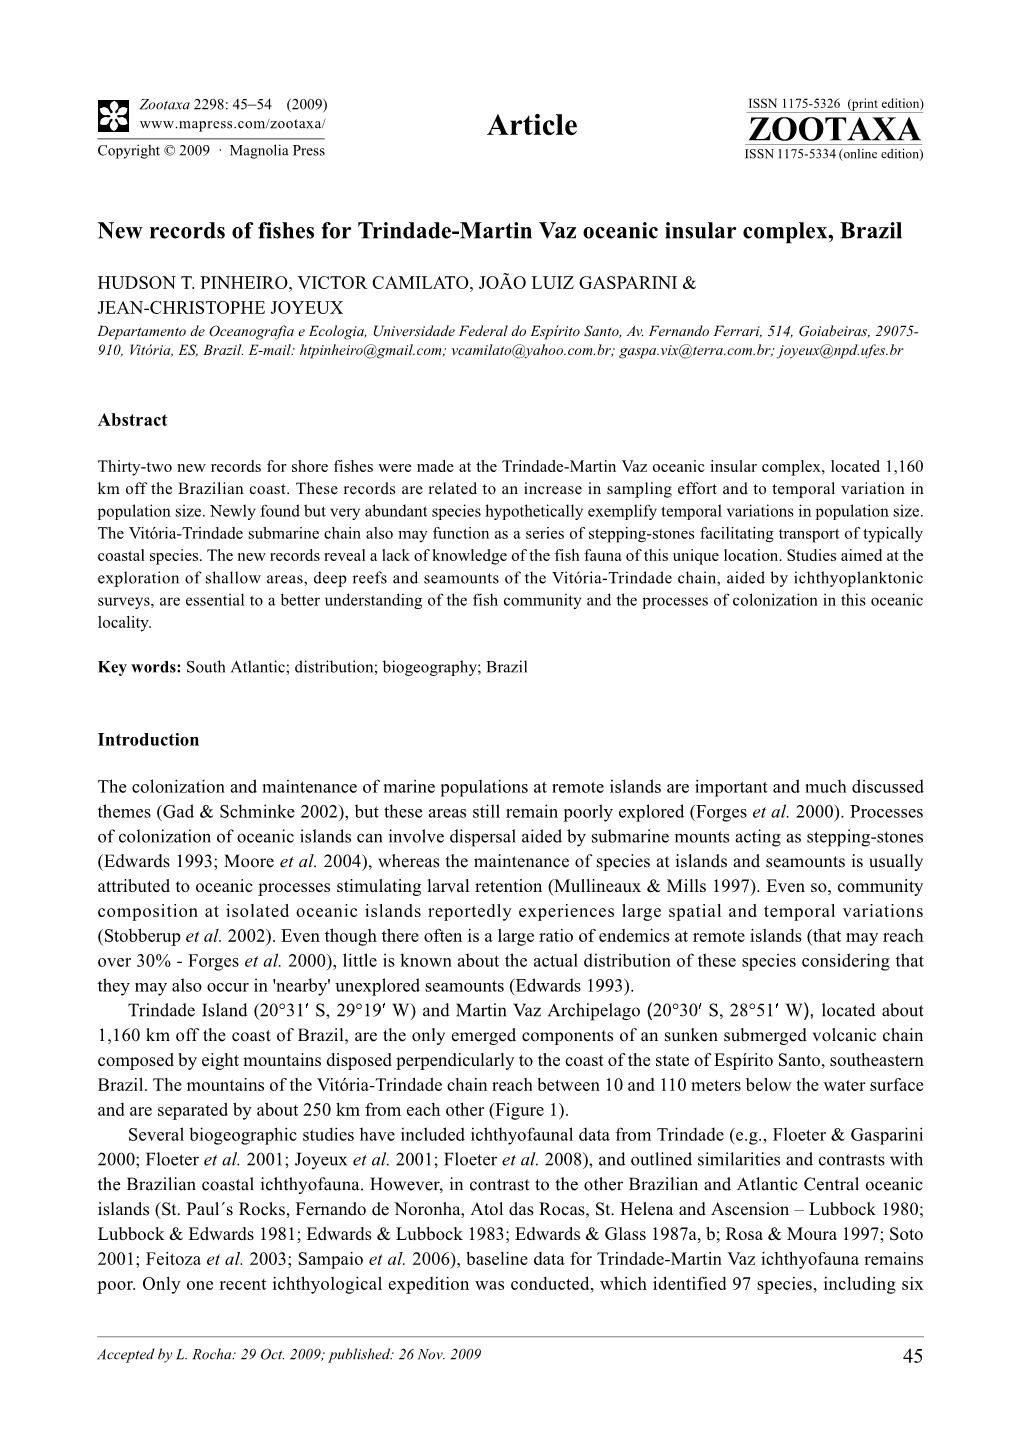 Zootaxa, New Records of Fishes for Trindade-Martin Vaz Oceanic Insular Complex, Brazil